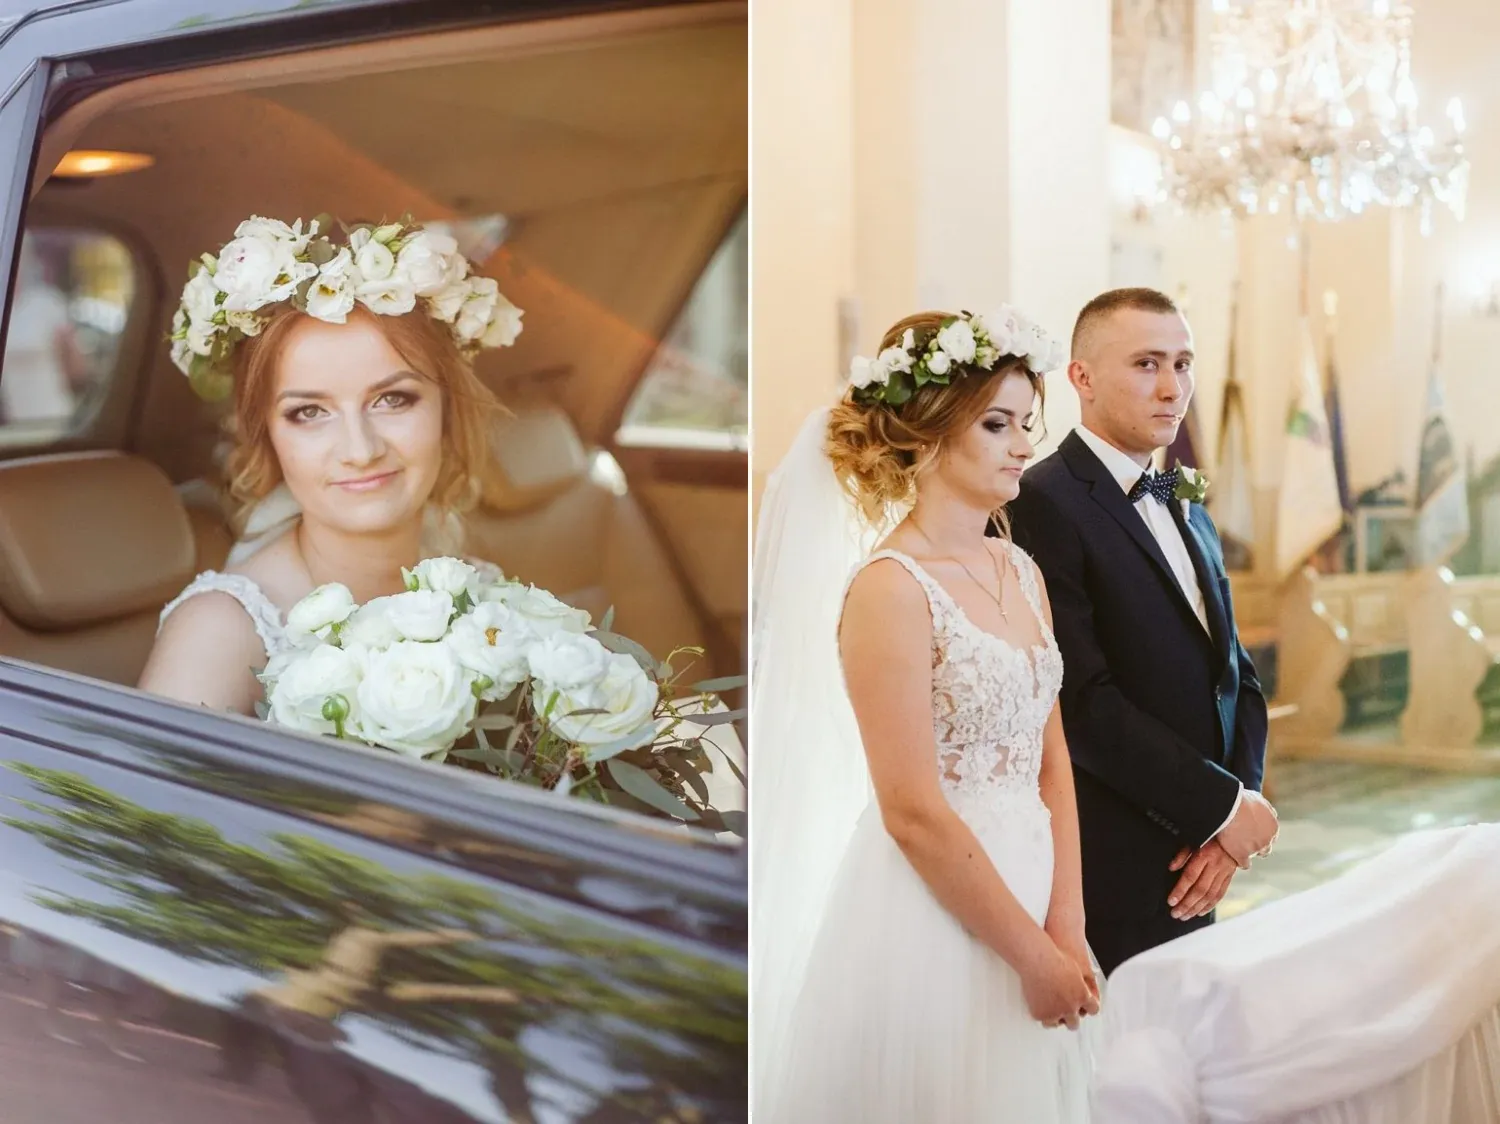 joannamariusz_wedding_12.webp - Joanna & Mariusz- Monika Chmielewska - wedding, portaits, family photography - Munich